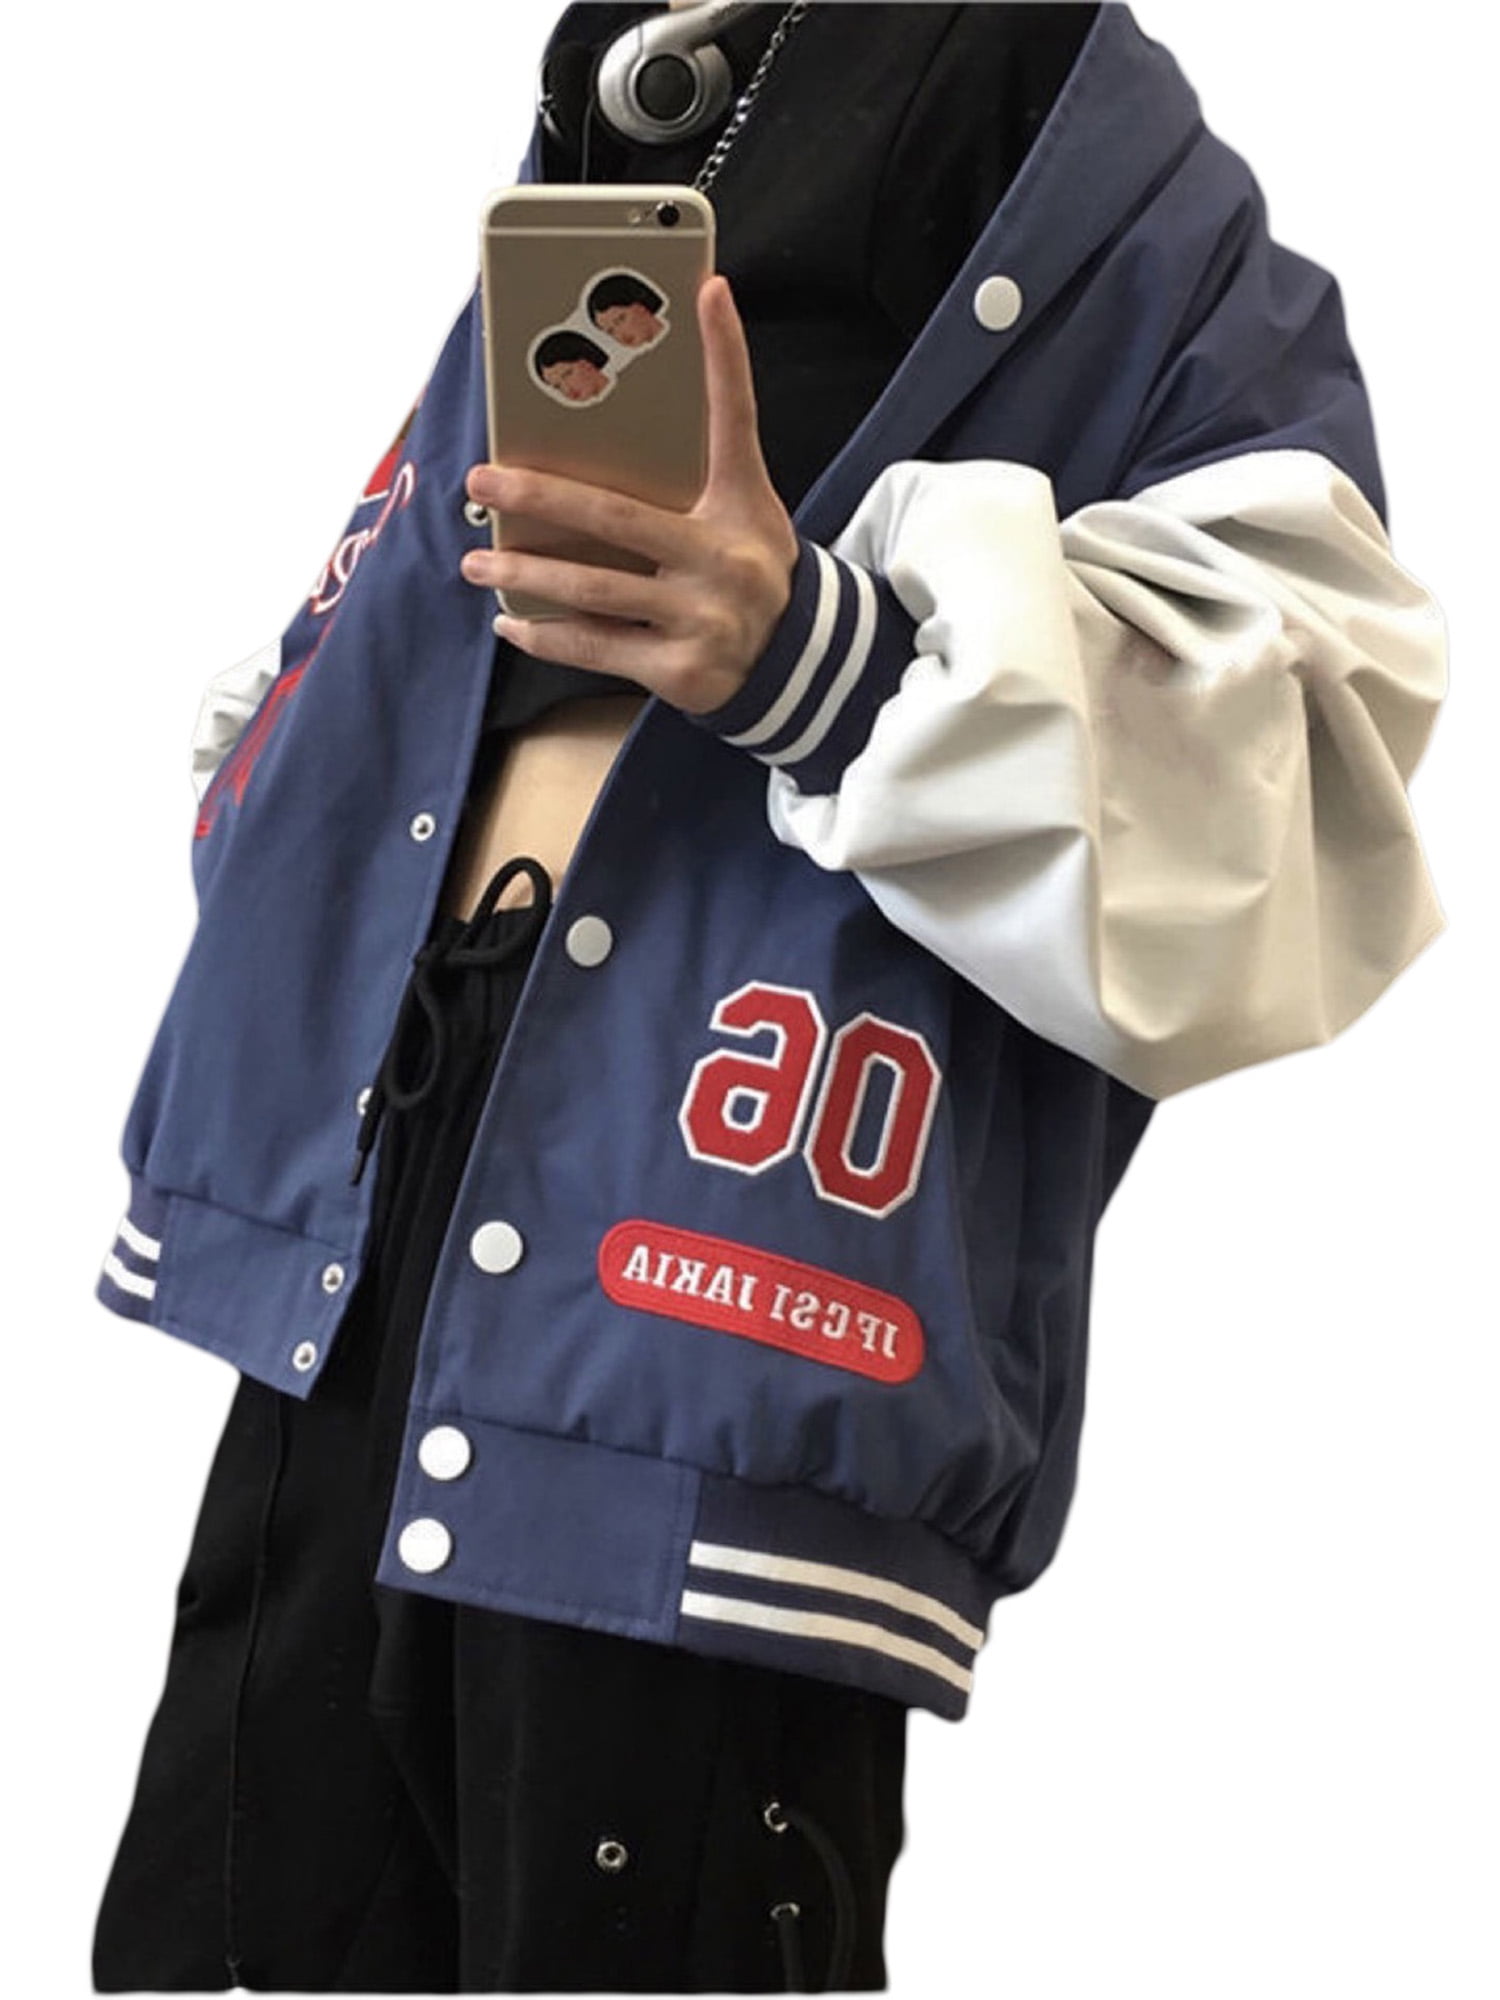 Classic Vintage Oversized Baseball Uniform Jacket Chic Simple Preppy Style Y2K Casual Pilot Jacket Outwear For Unisex